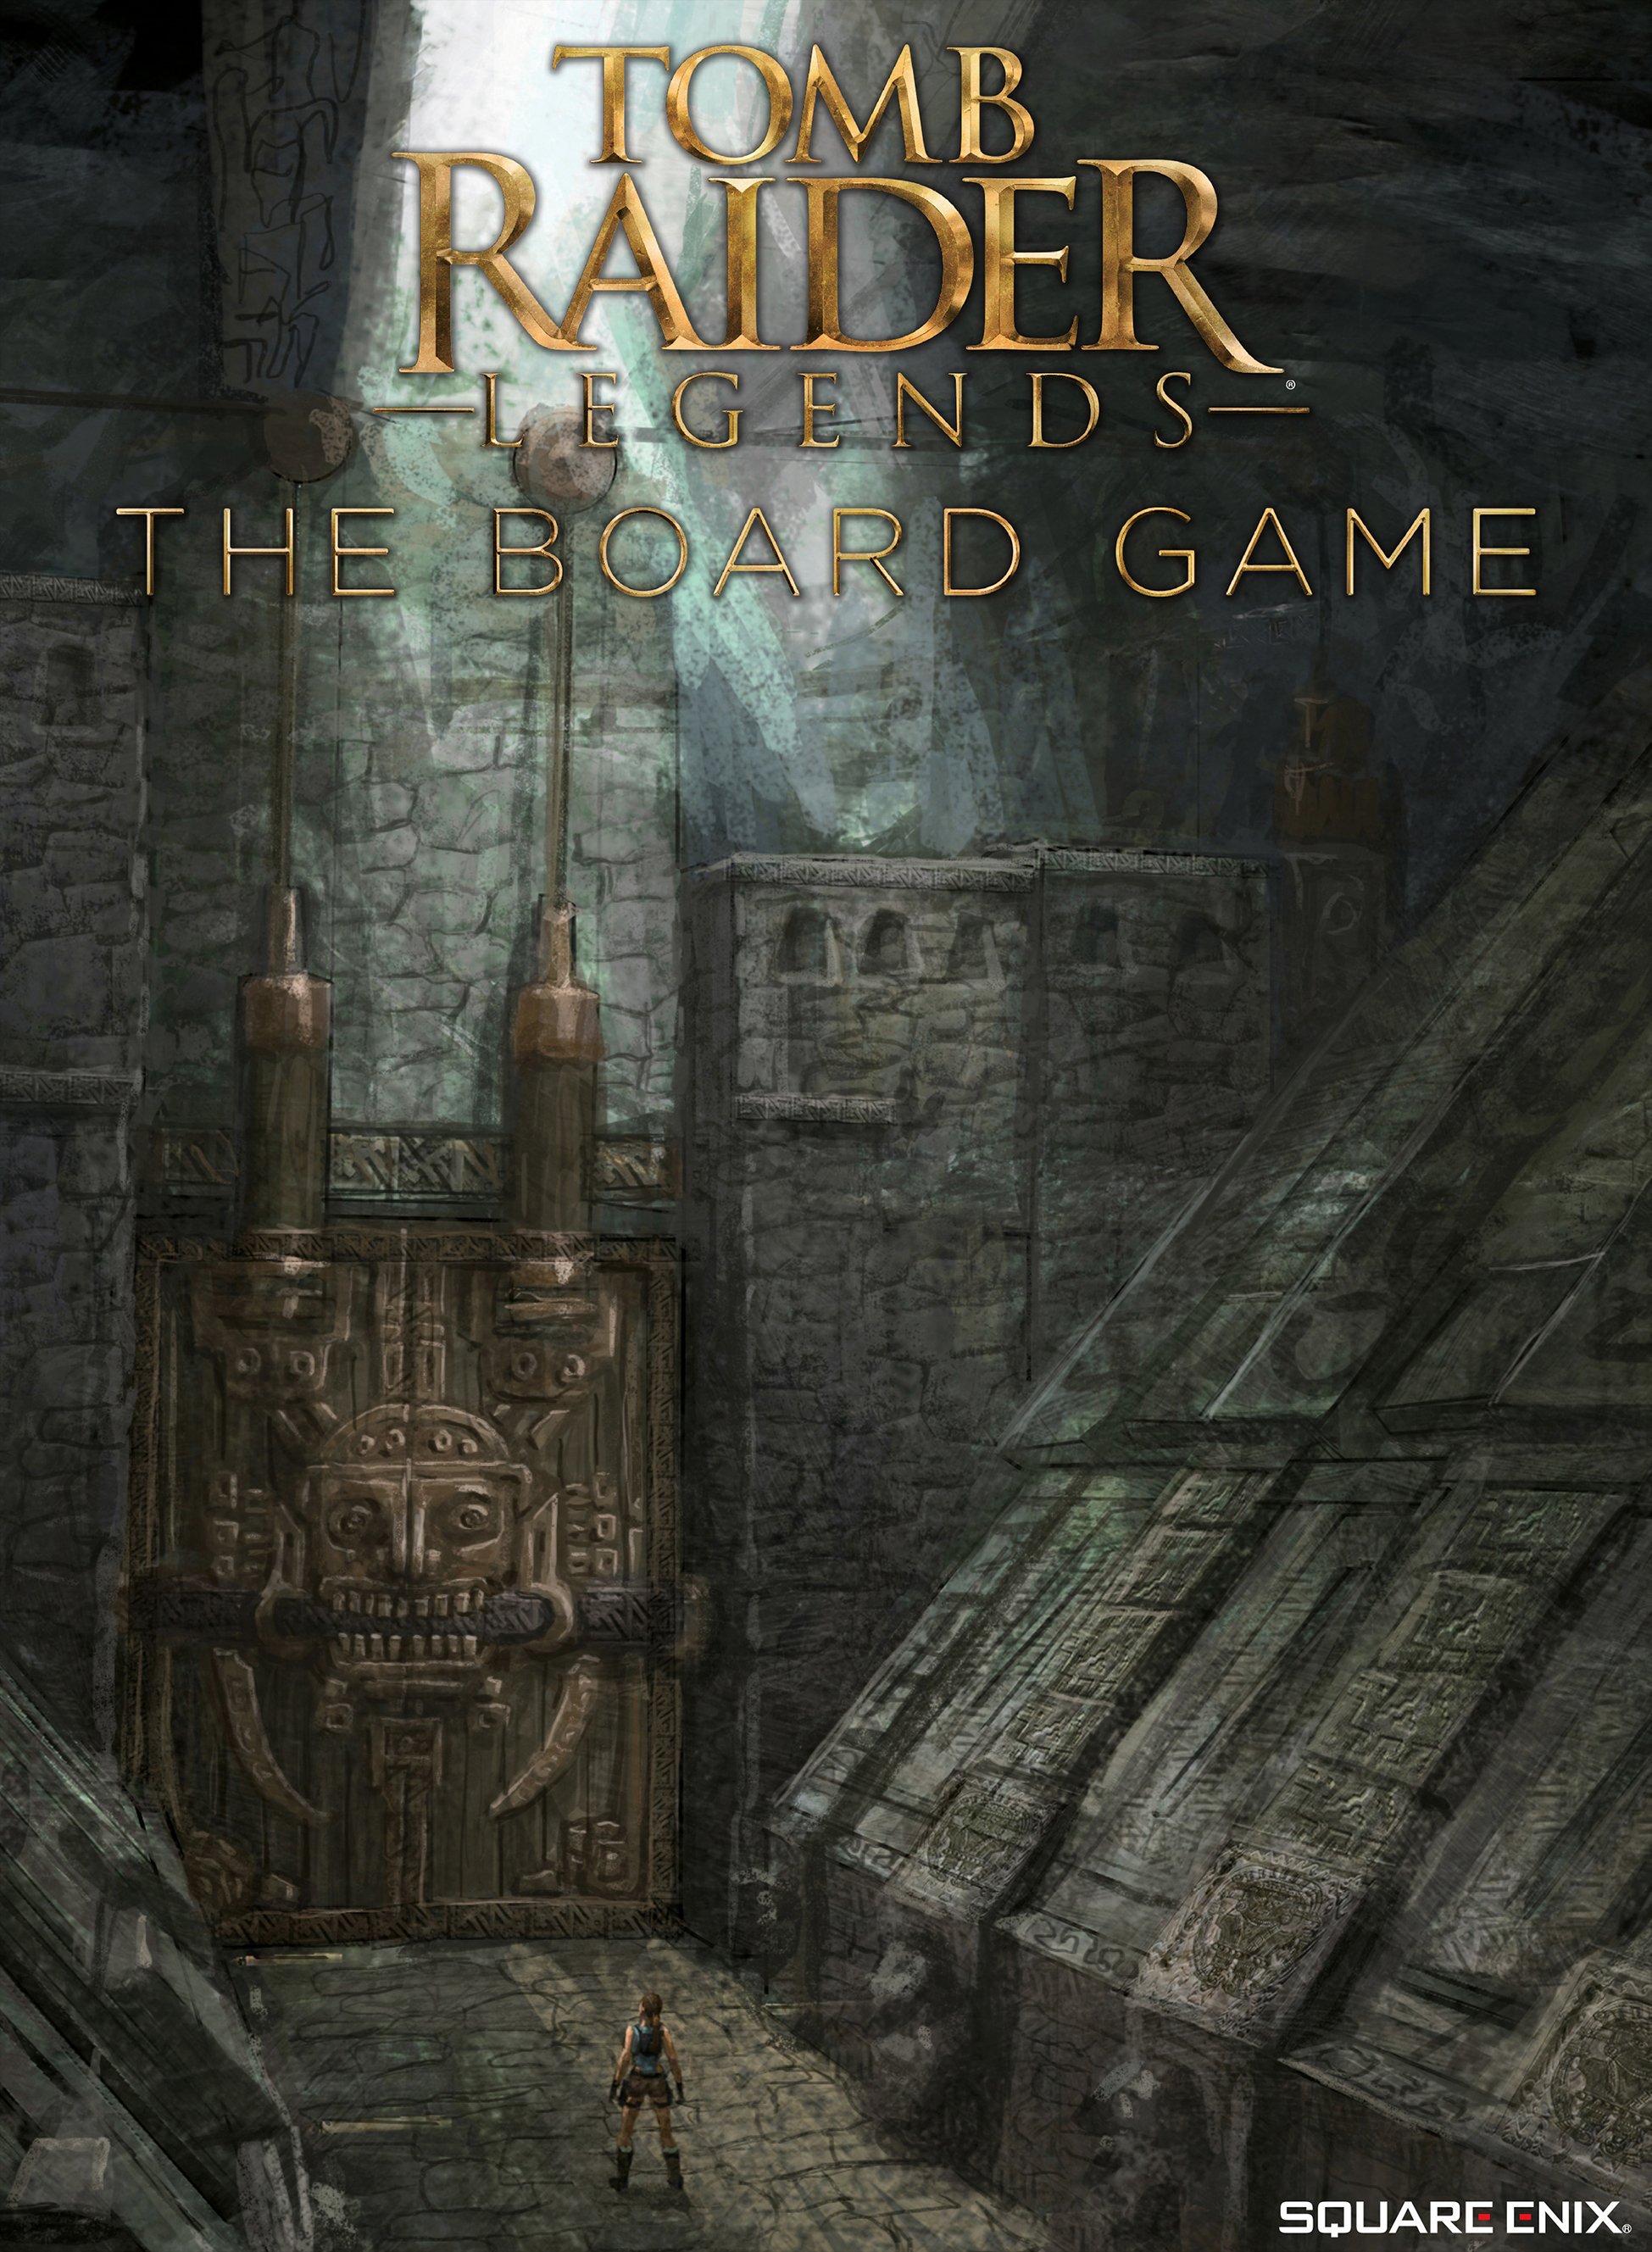 Tomb-raider-legends-board-game-concept.jpg